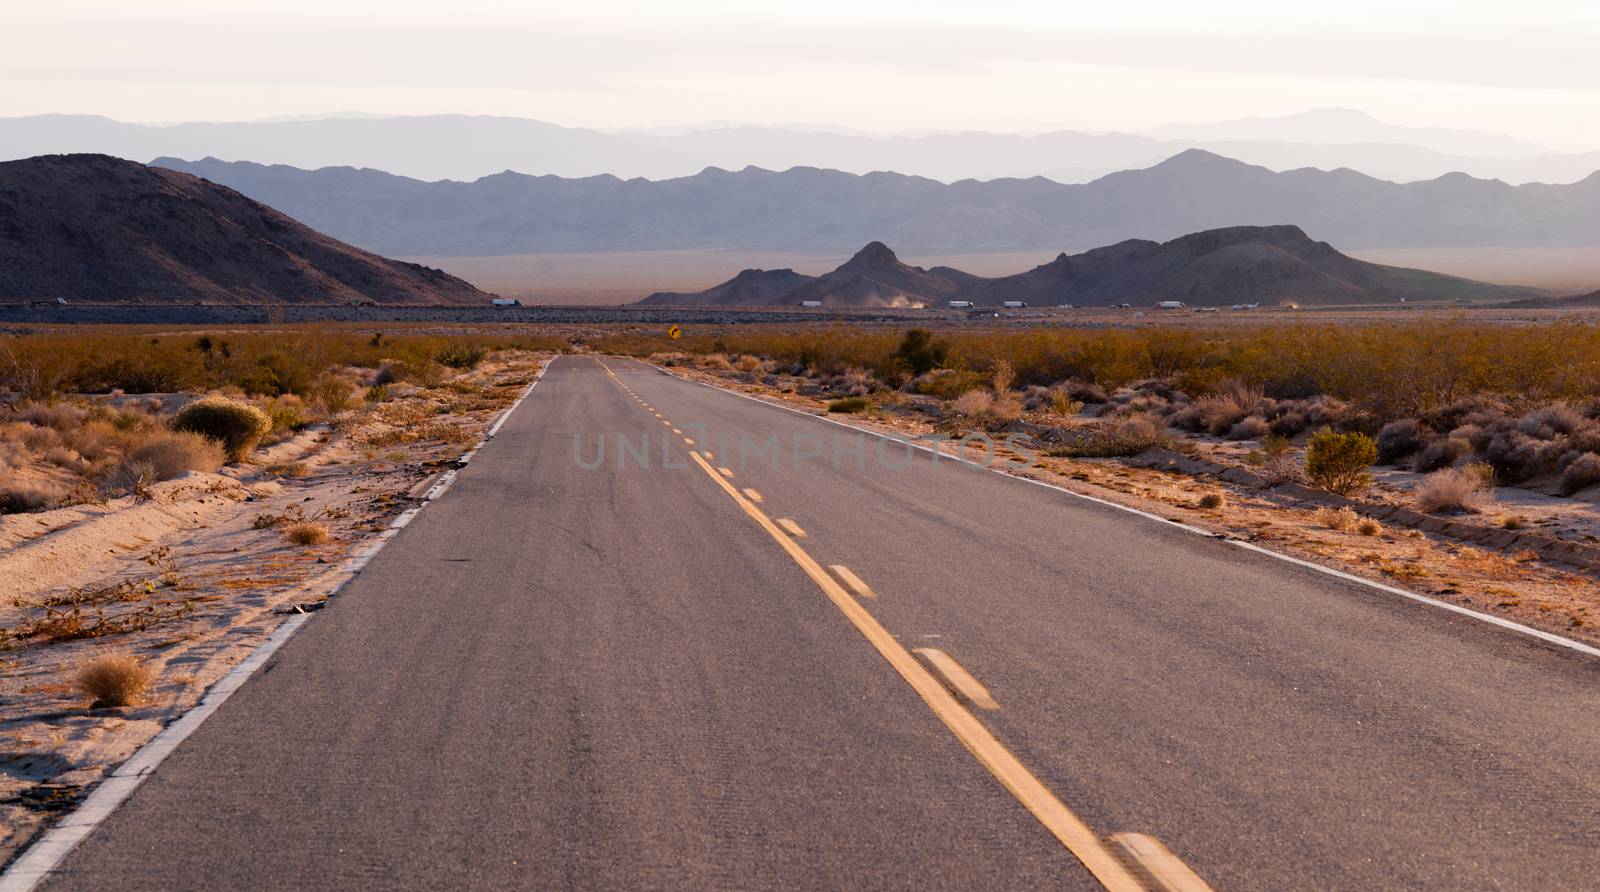 Kelbaker Road Approaches Needles Freeway US 40 California Desert by ChrisBoswell